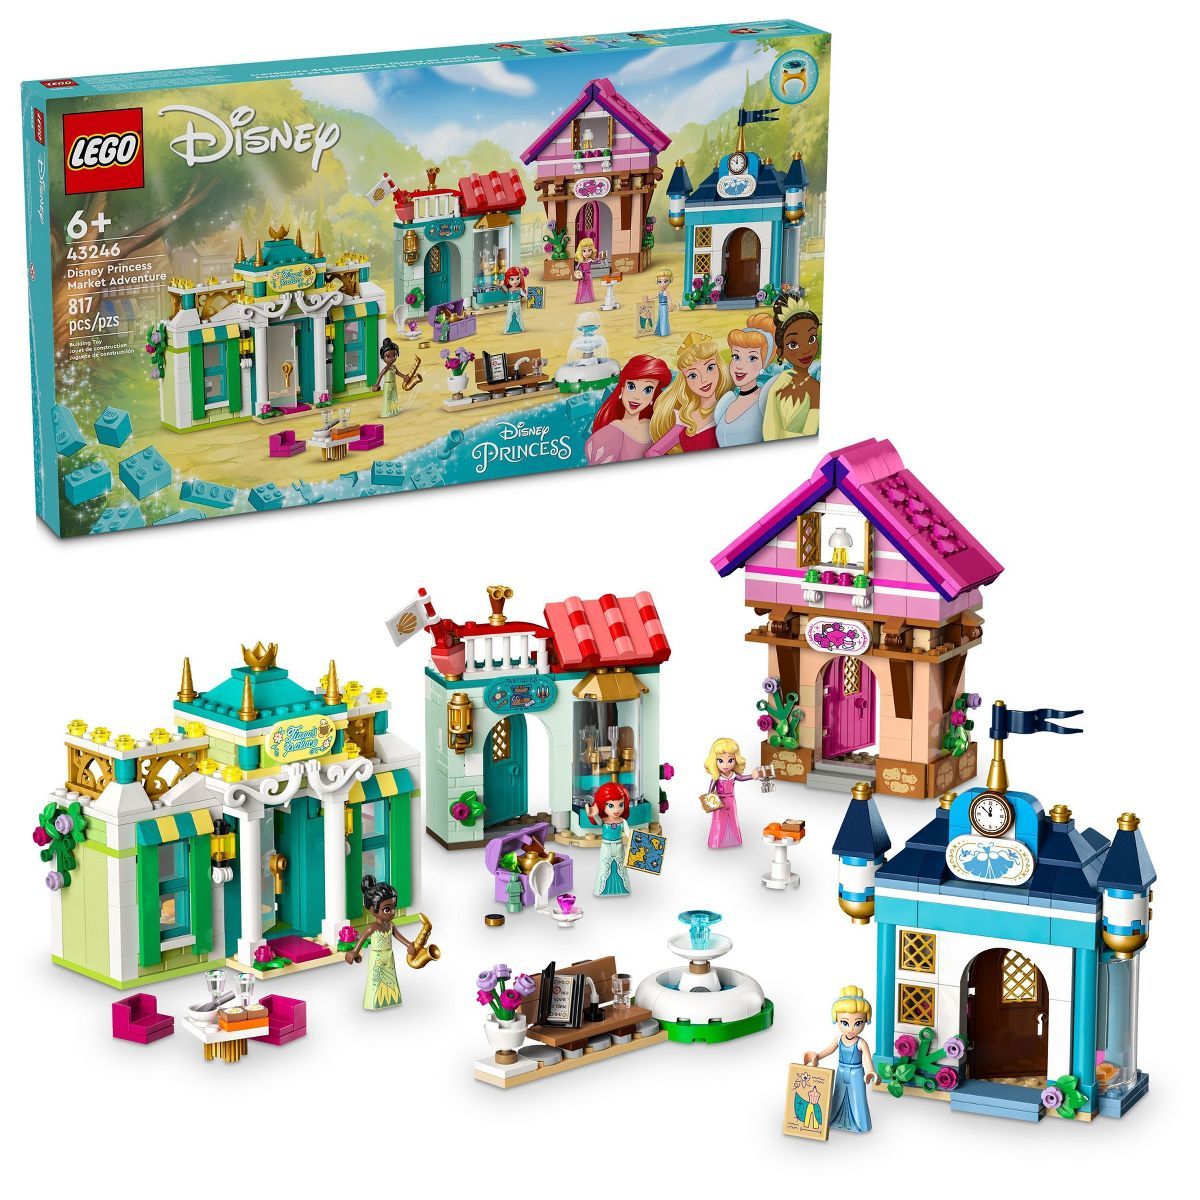 LEGO Disney Princess: Disney Princess Market Adventure Toy Set 43246 | Target